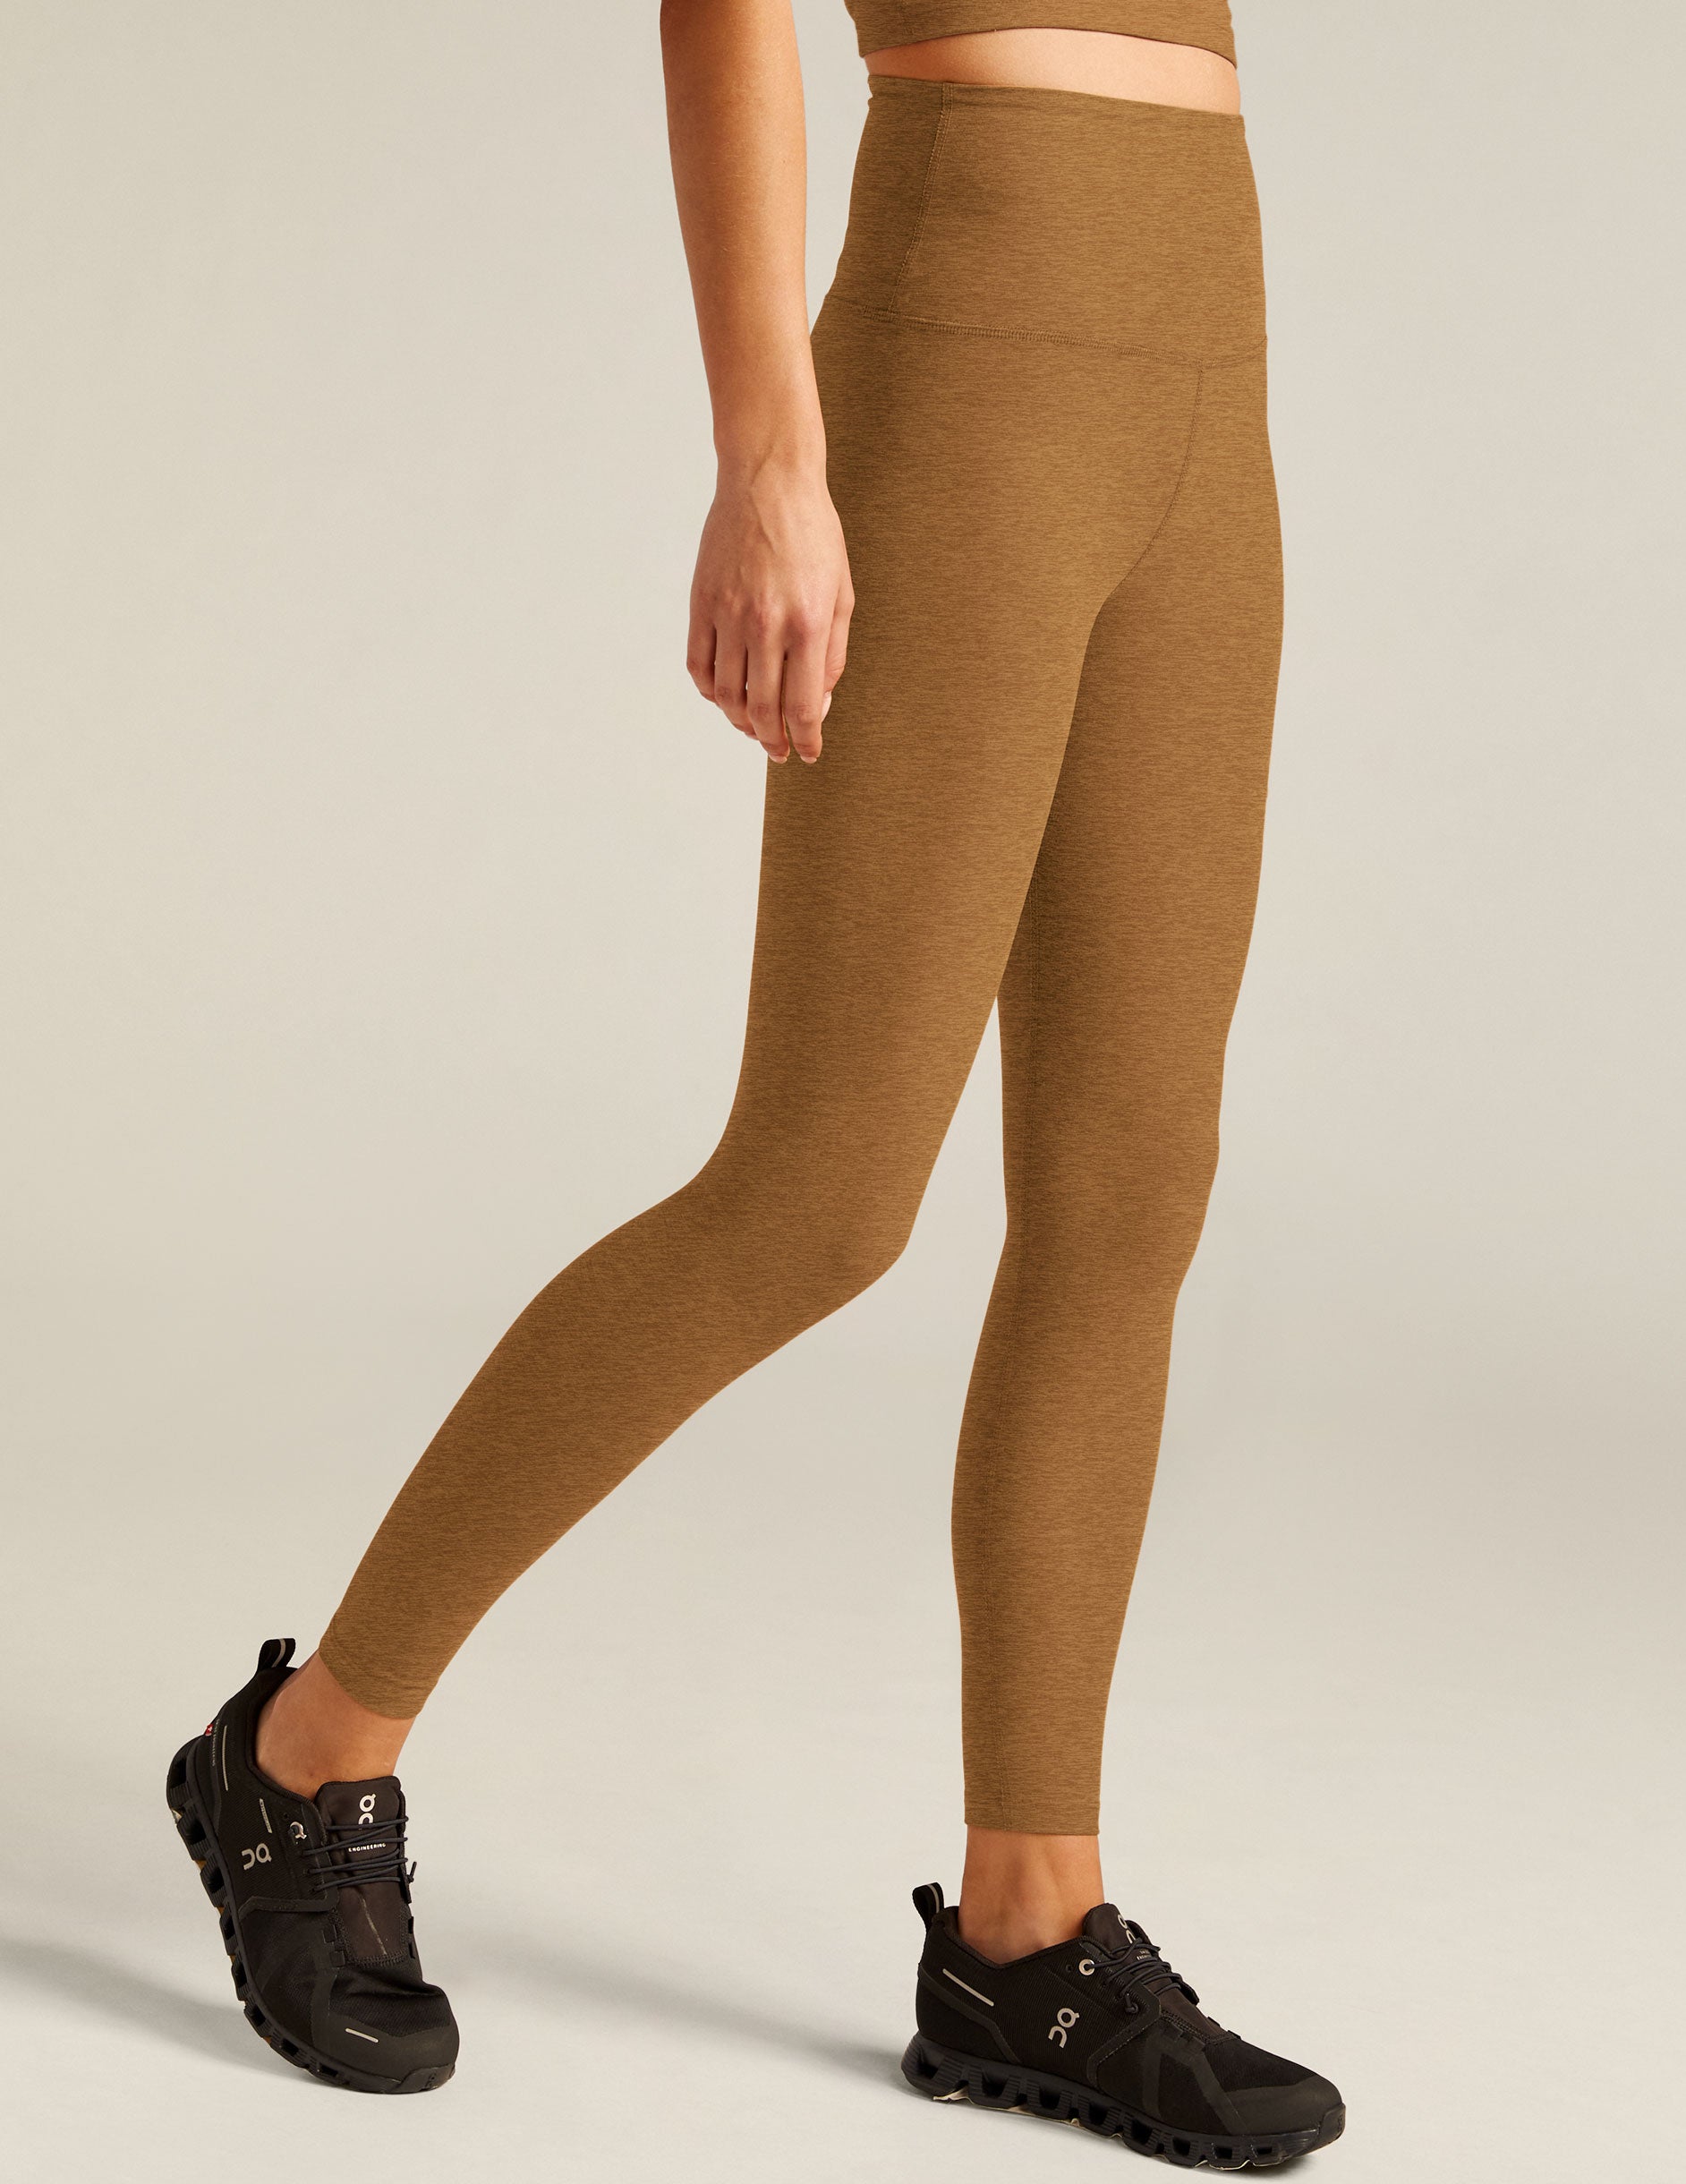 brown high-waisted midi leggings. 